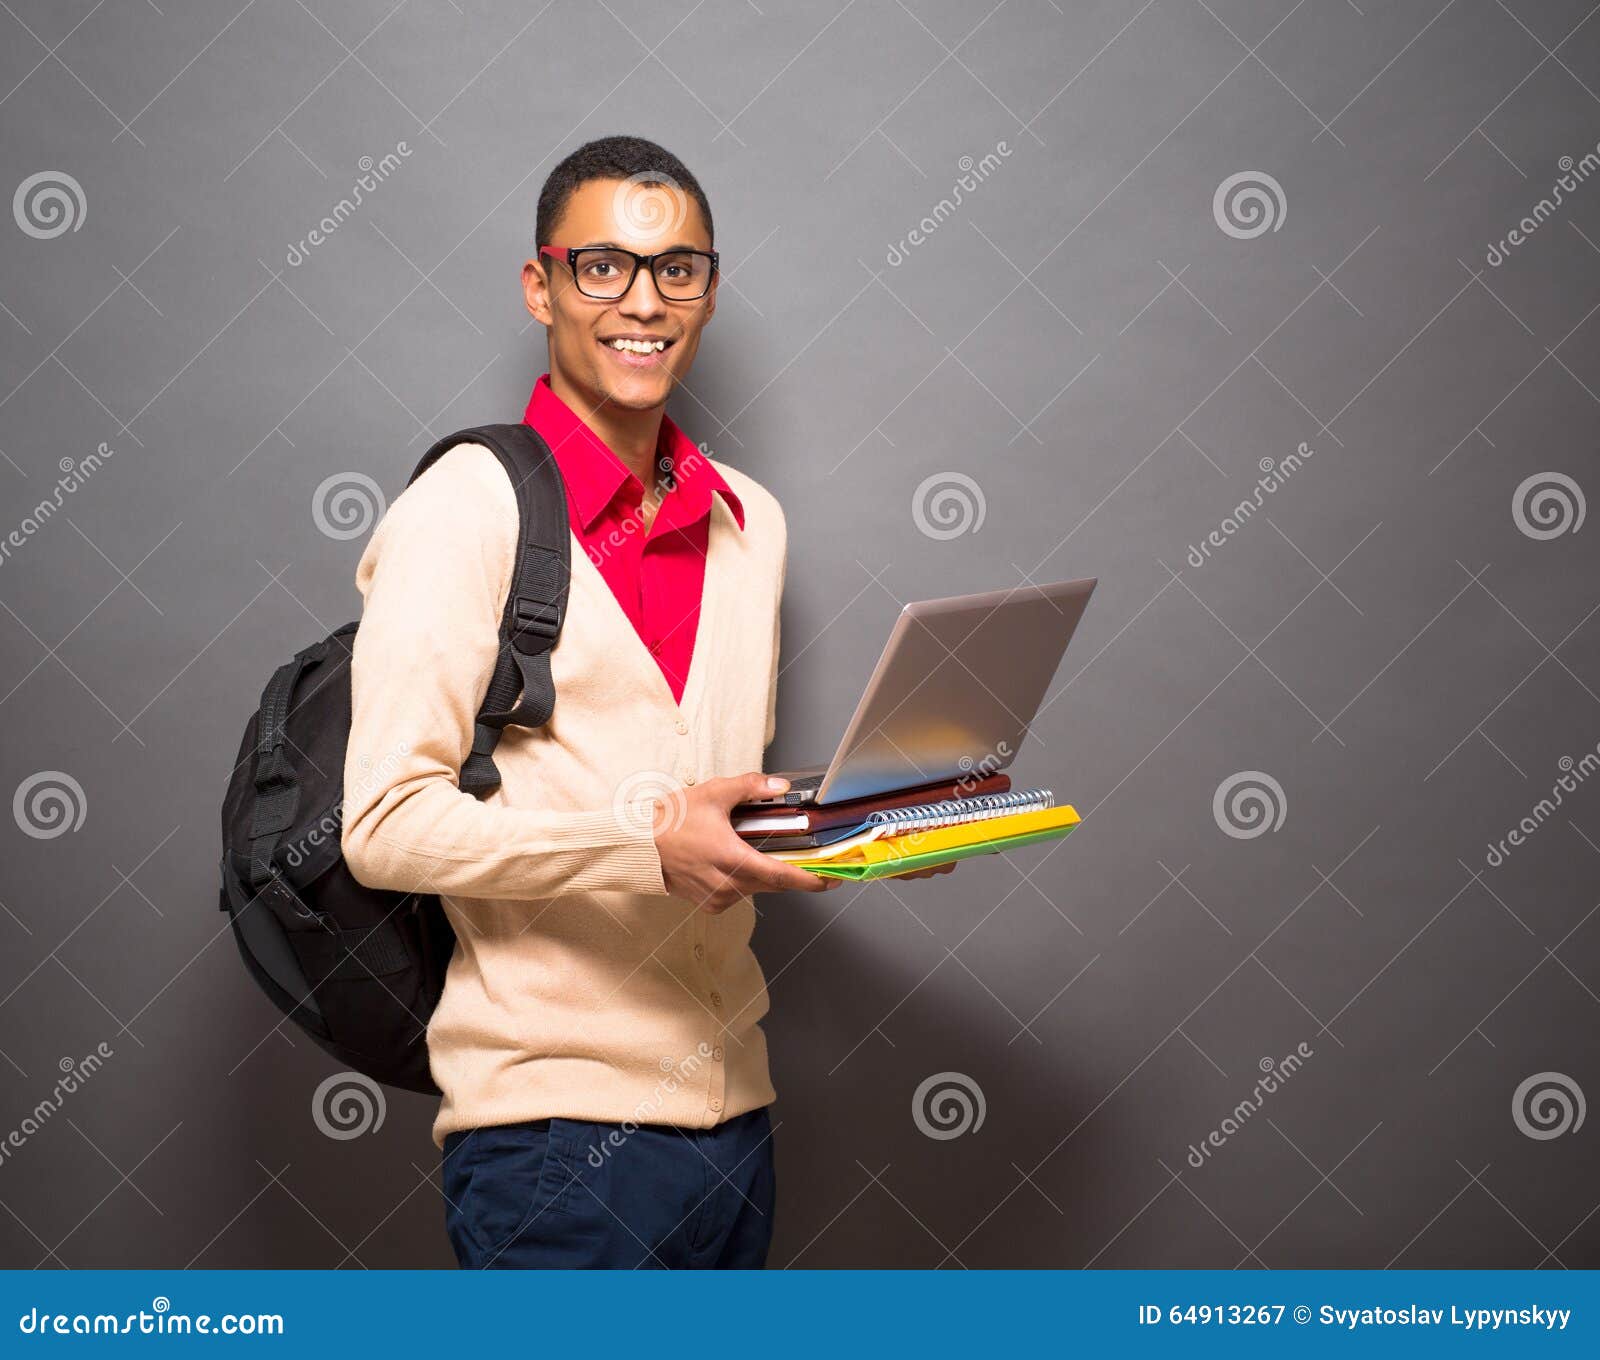 Latina Student At Computer Wearing Glasses Stock Photo 